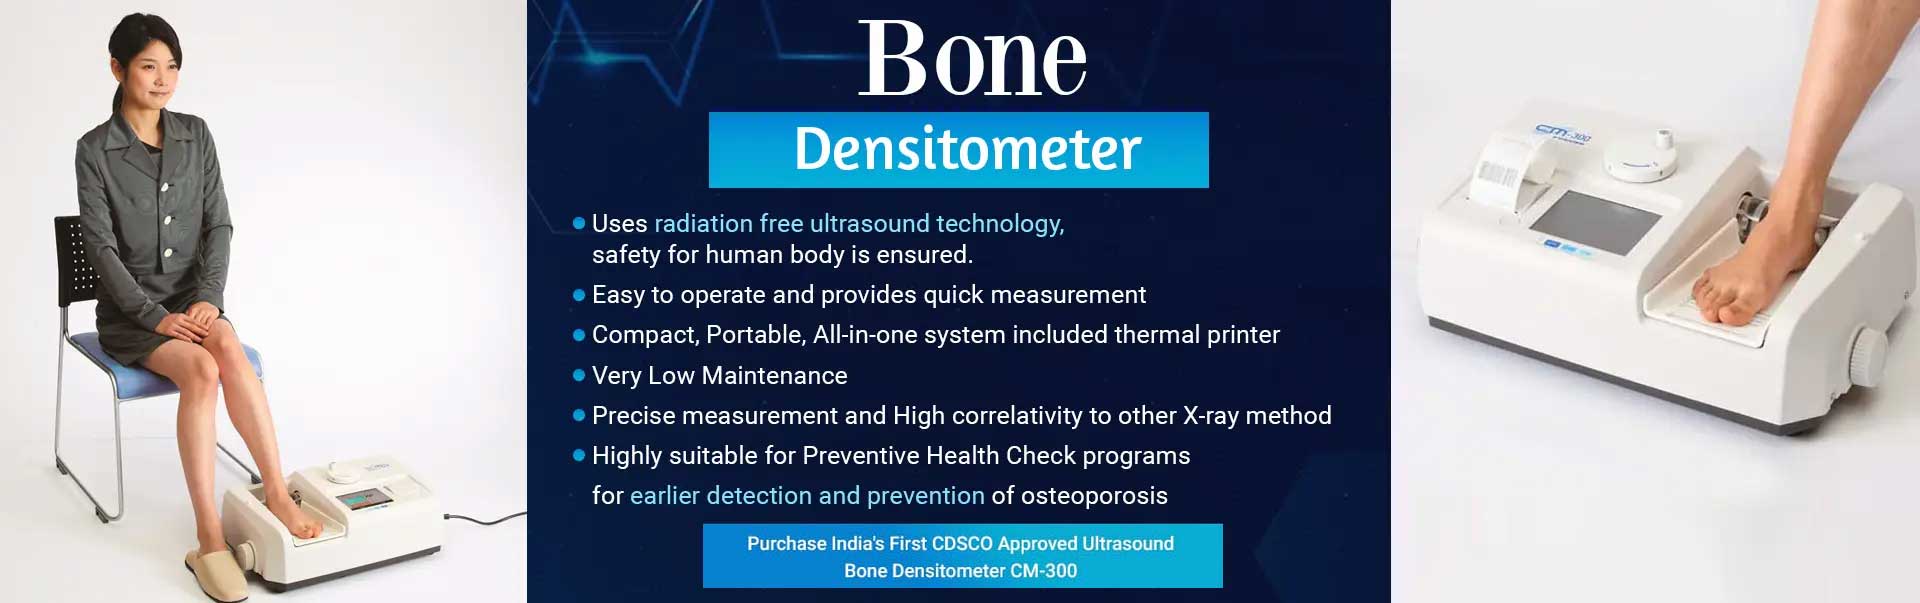 Bone Densitometer Manufacturers in Chennai